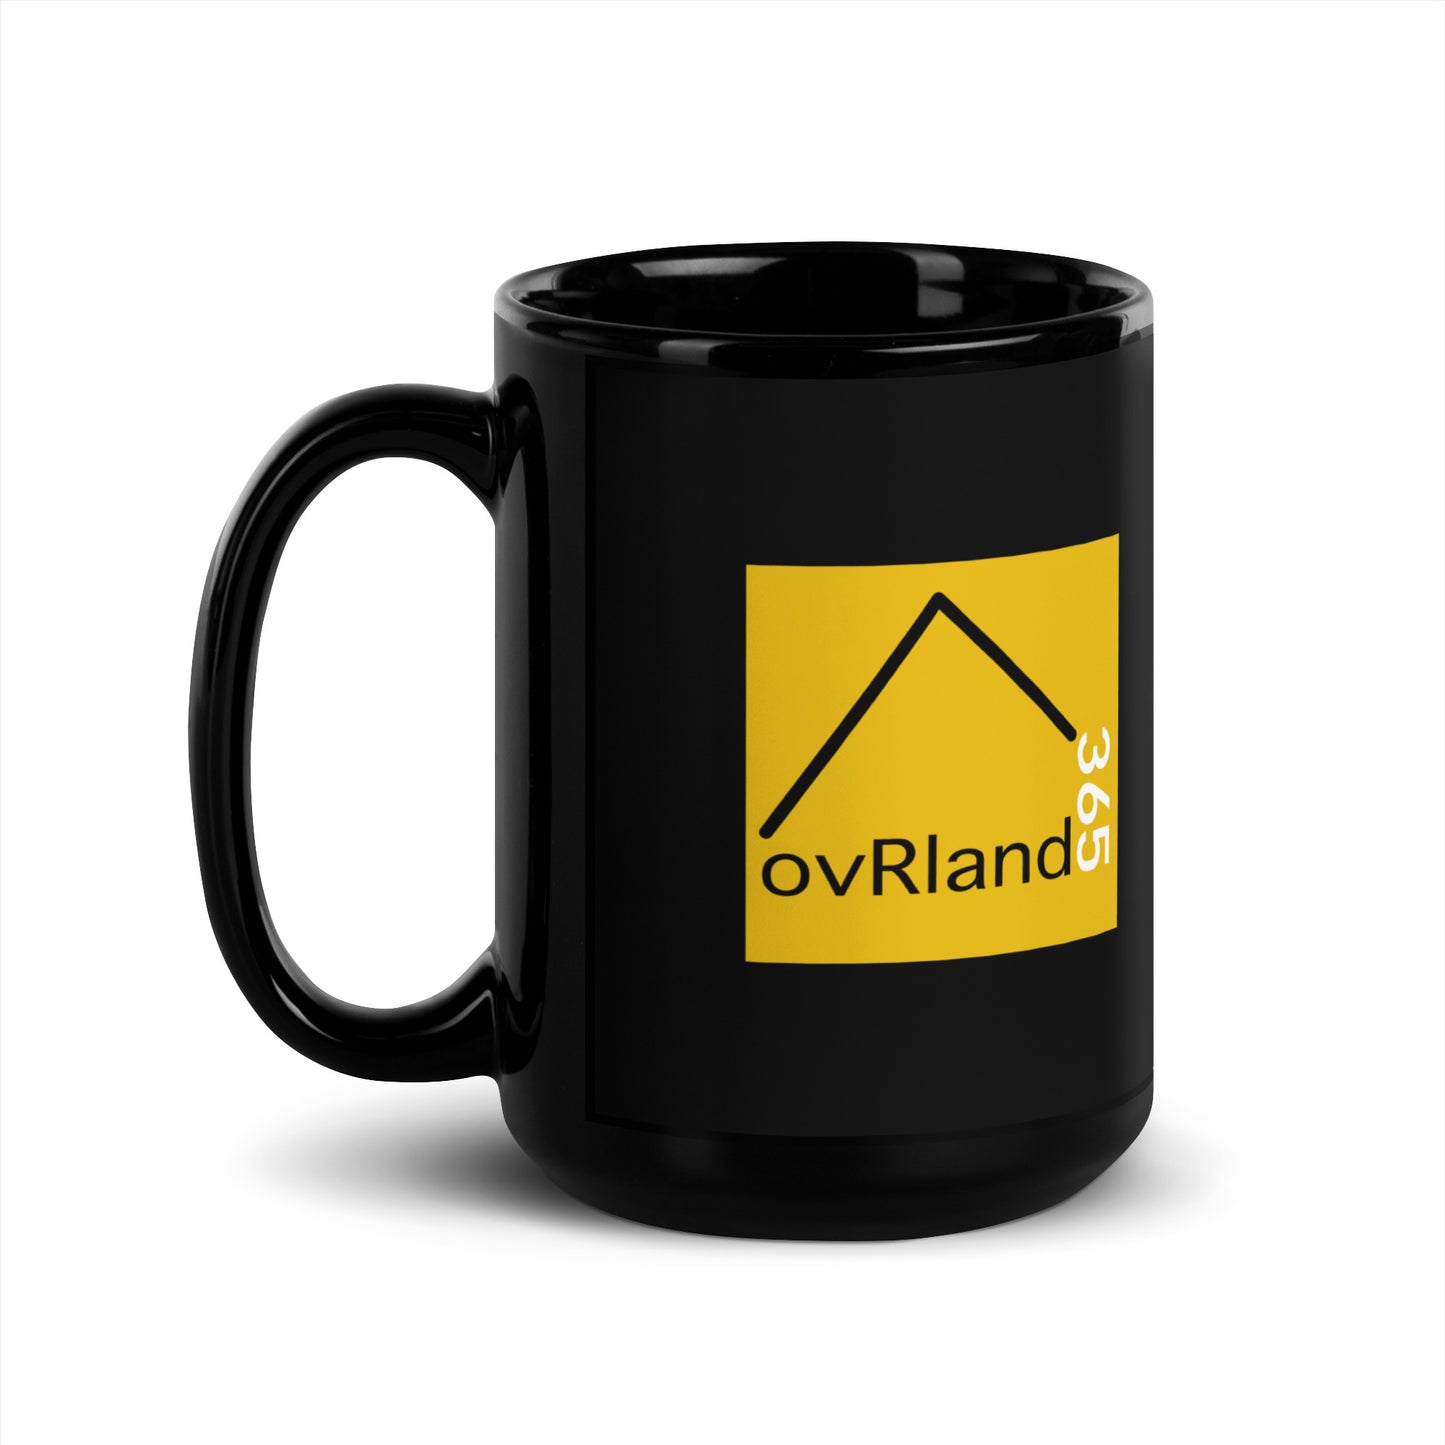 Overland the Redwoods. Bigfoot. Black 15oz coffee mug. back view. overland365.com